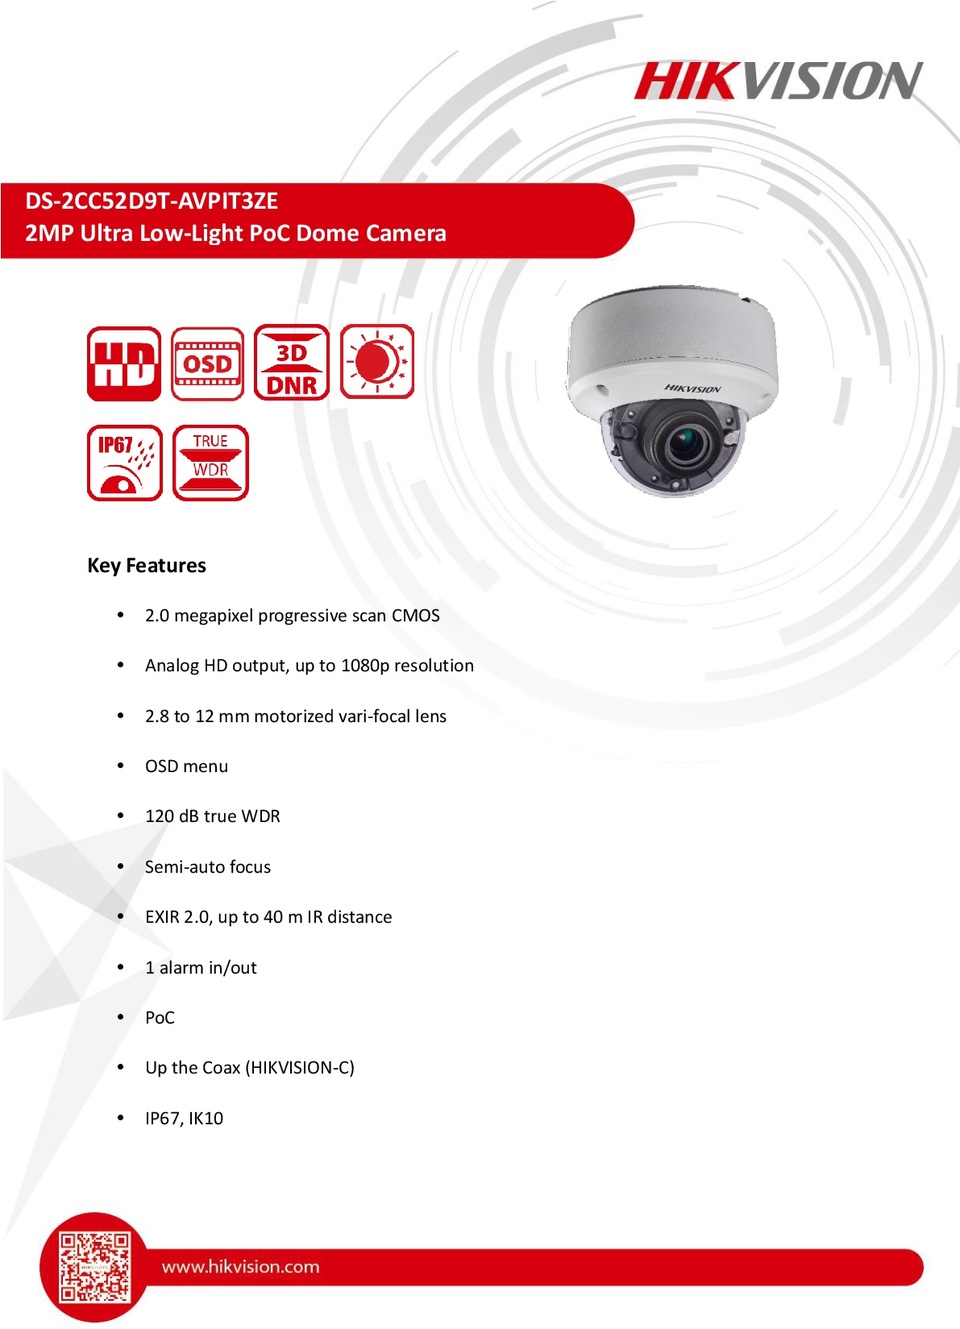 Hikvision DS-2CC52D9T-AVPIT3ZE HD-TVI 2MP PoC Dome Camera with Starlight & Vari Focal Lens 0